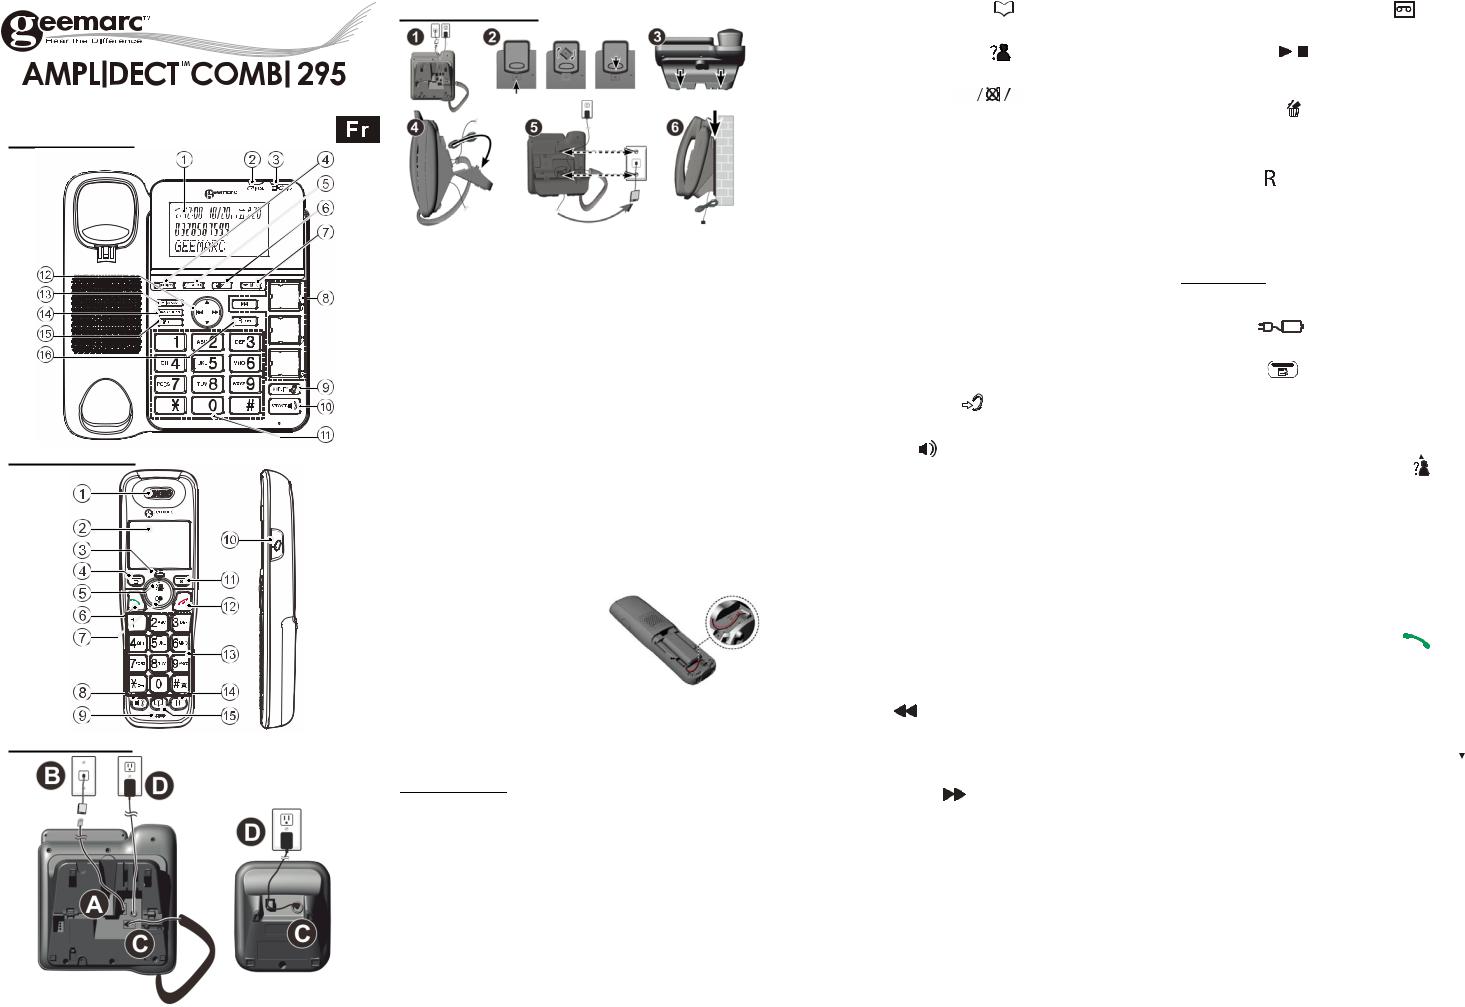 GEEMARC AMPLIDECT COMBI 295 User Manual